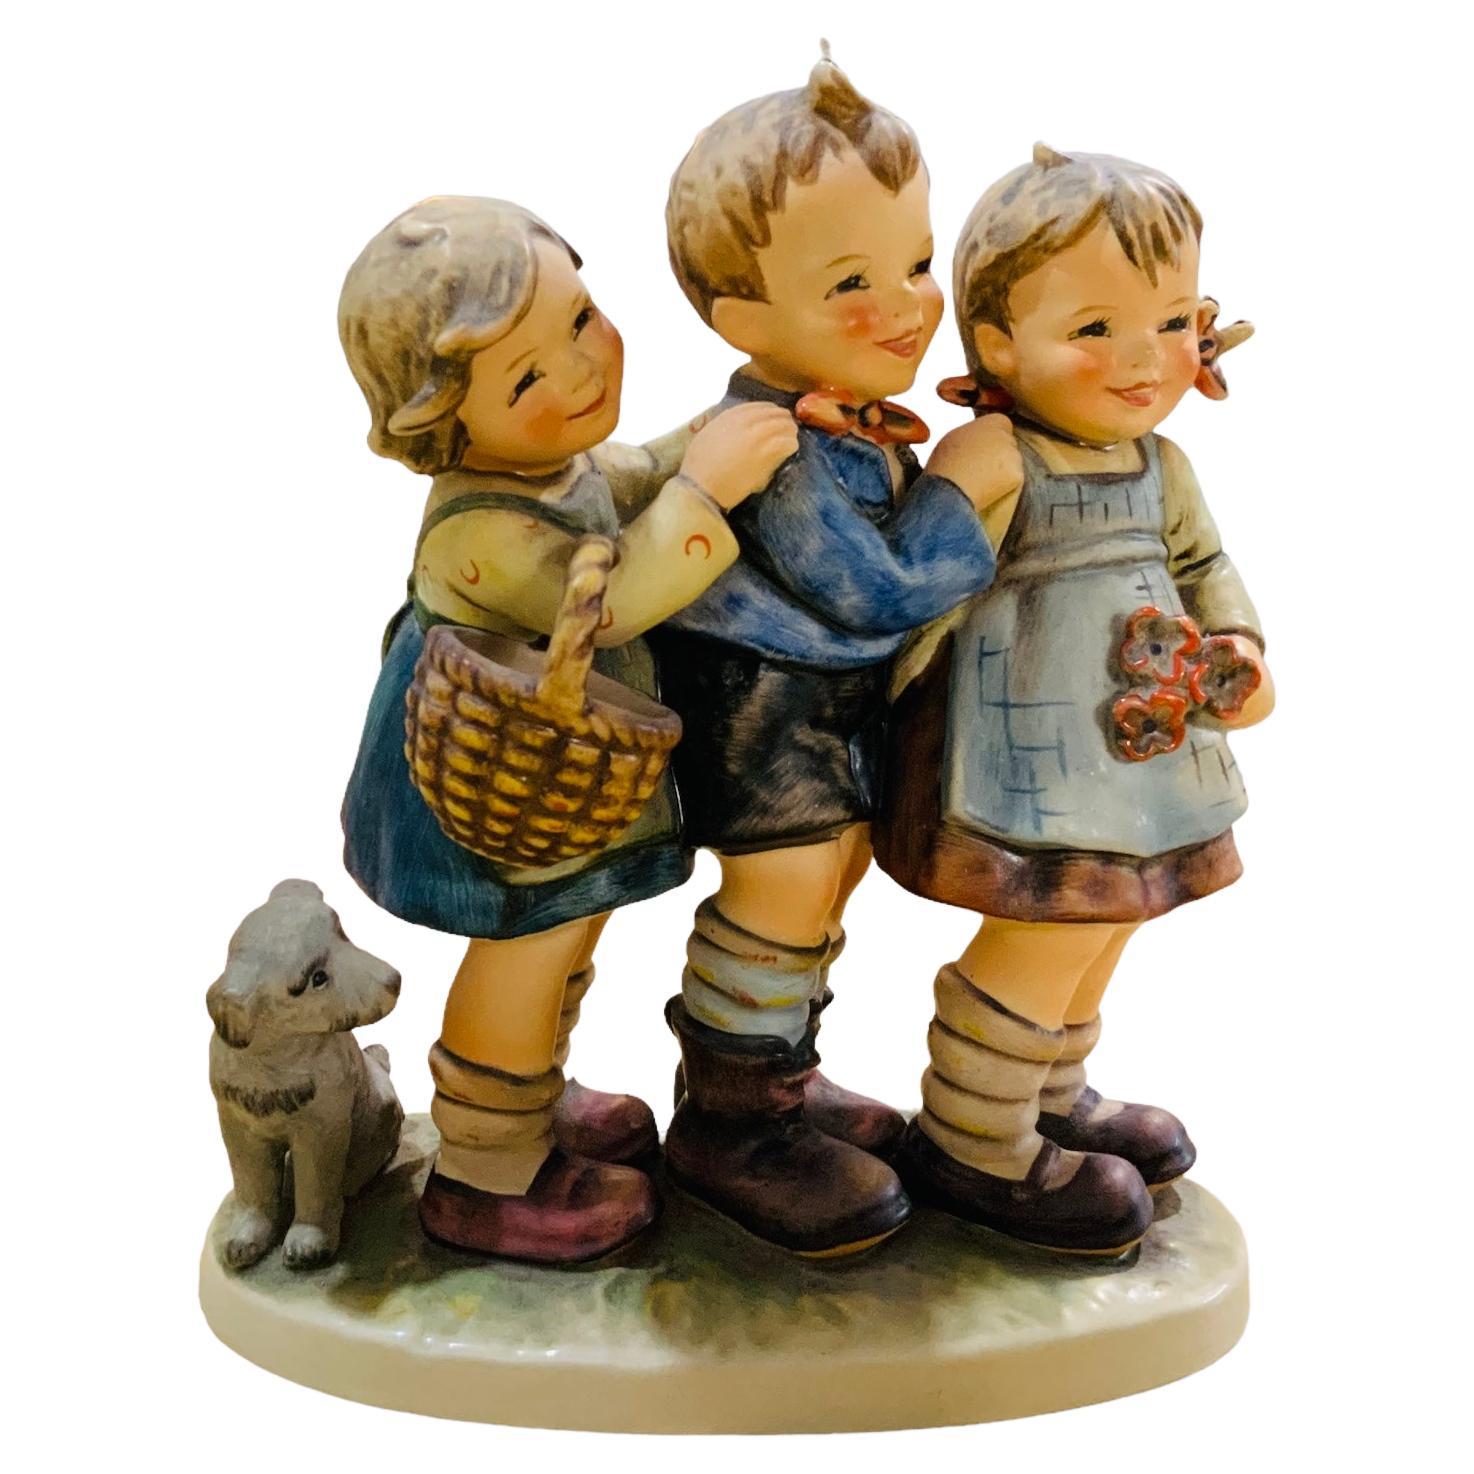 Goebel Company Hummel Porcelain Group Figurines “Follow The Leader” For Sale